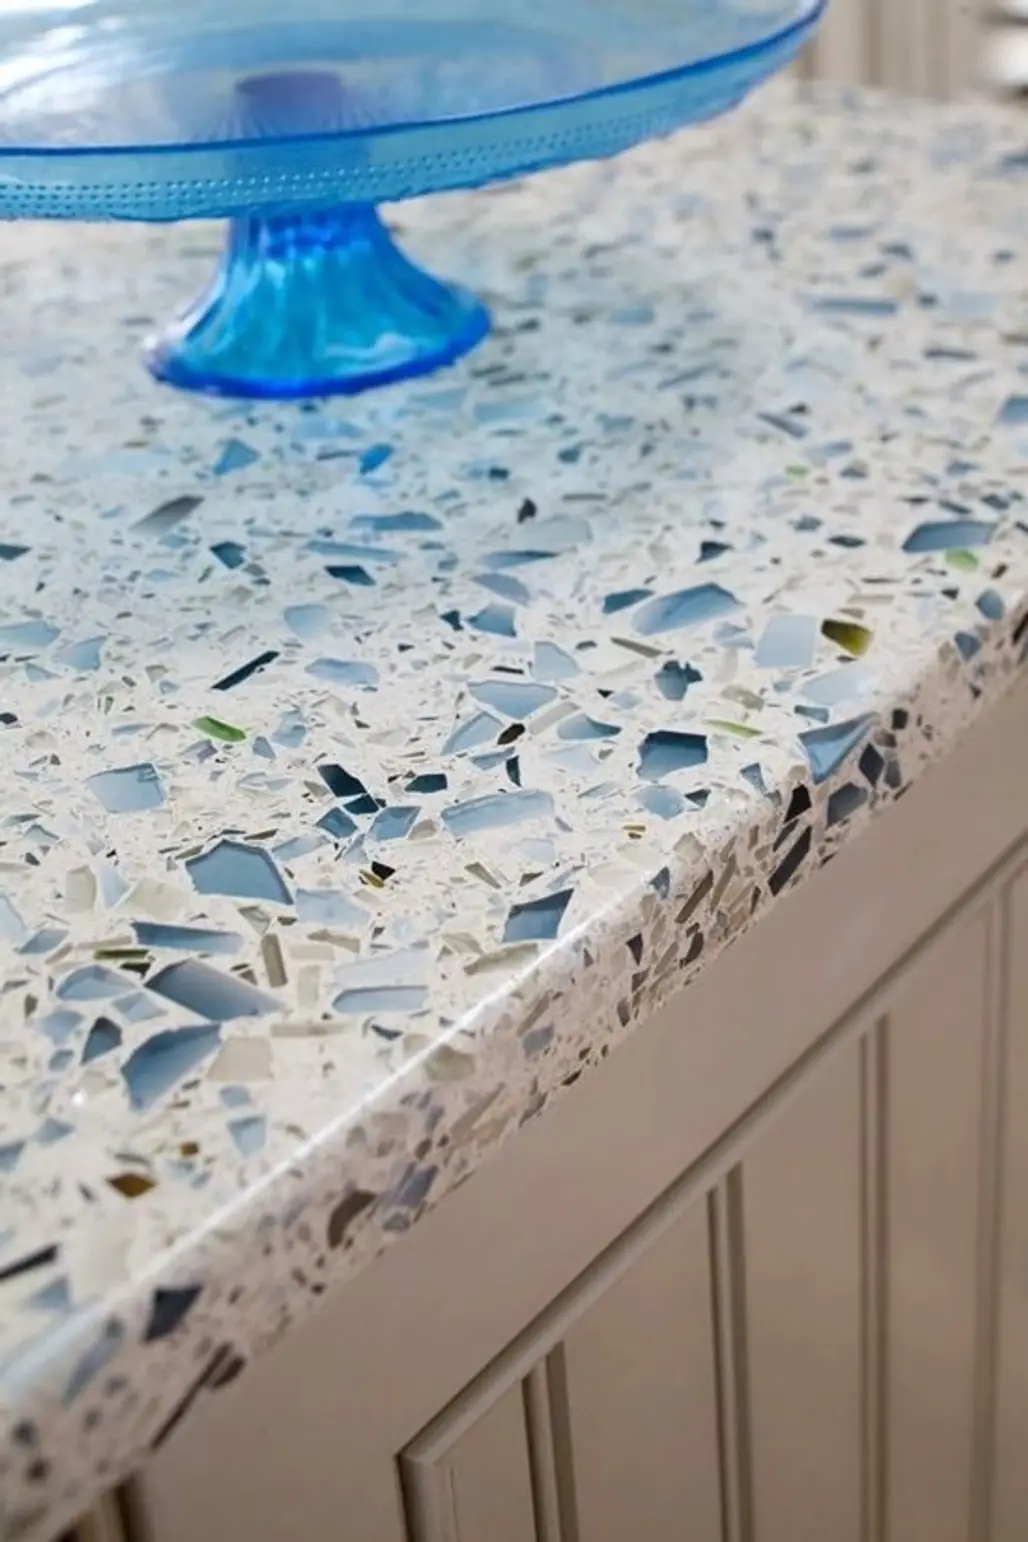 A Sea Glass Counter Top is Unique